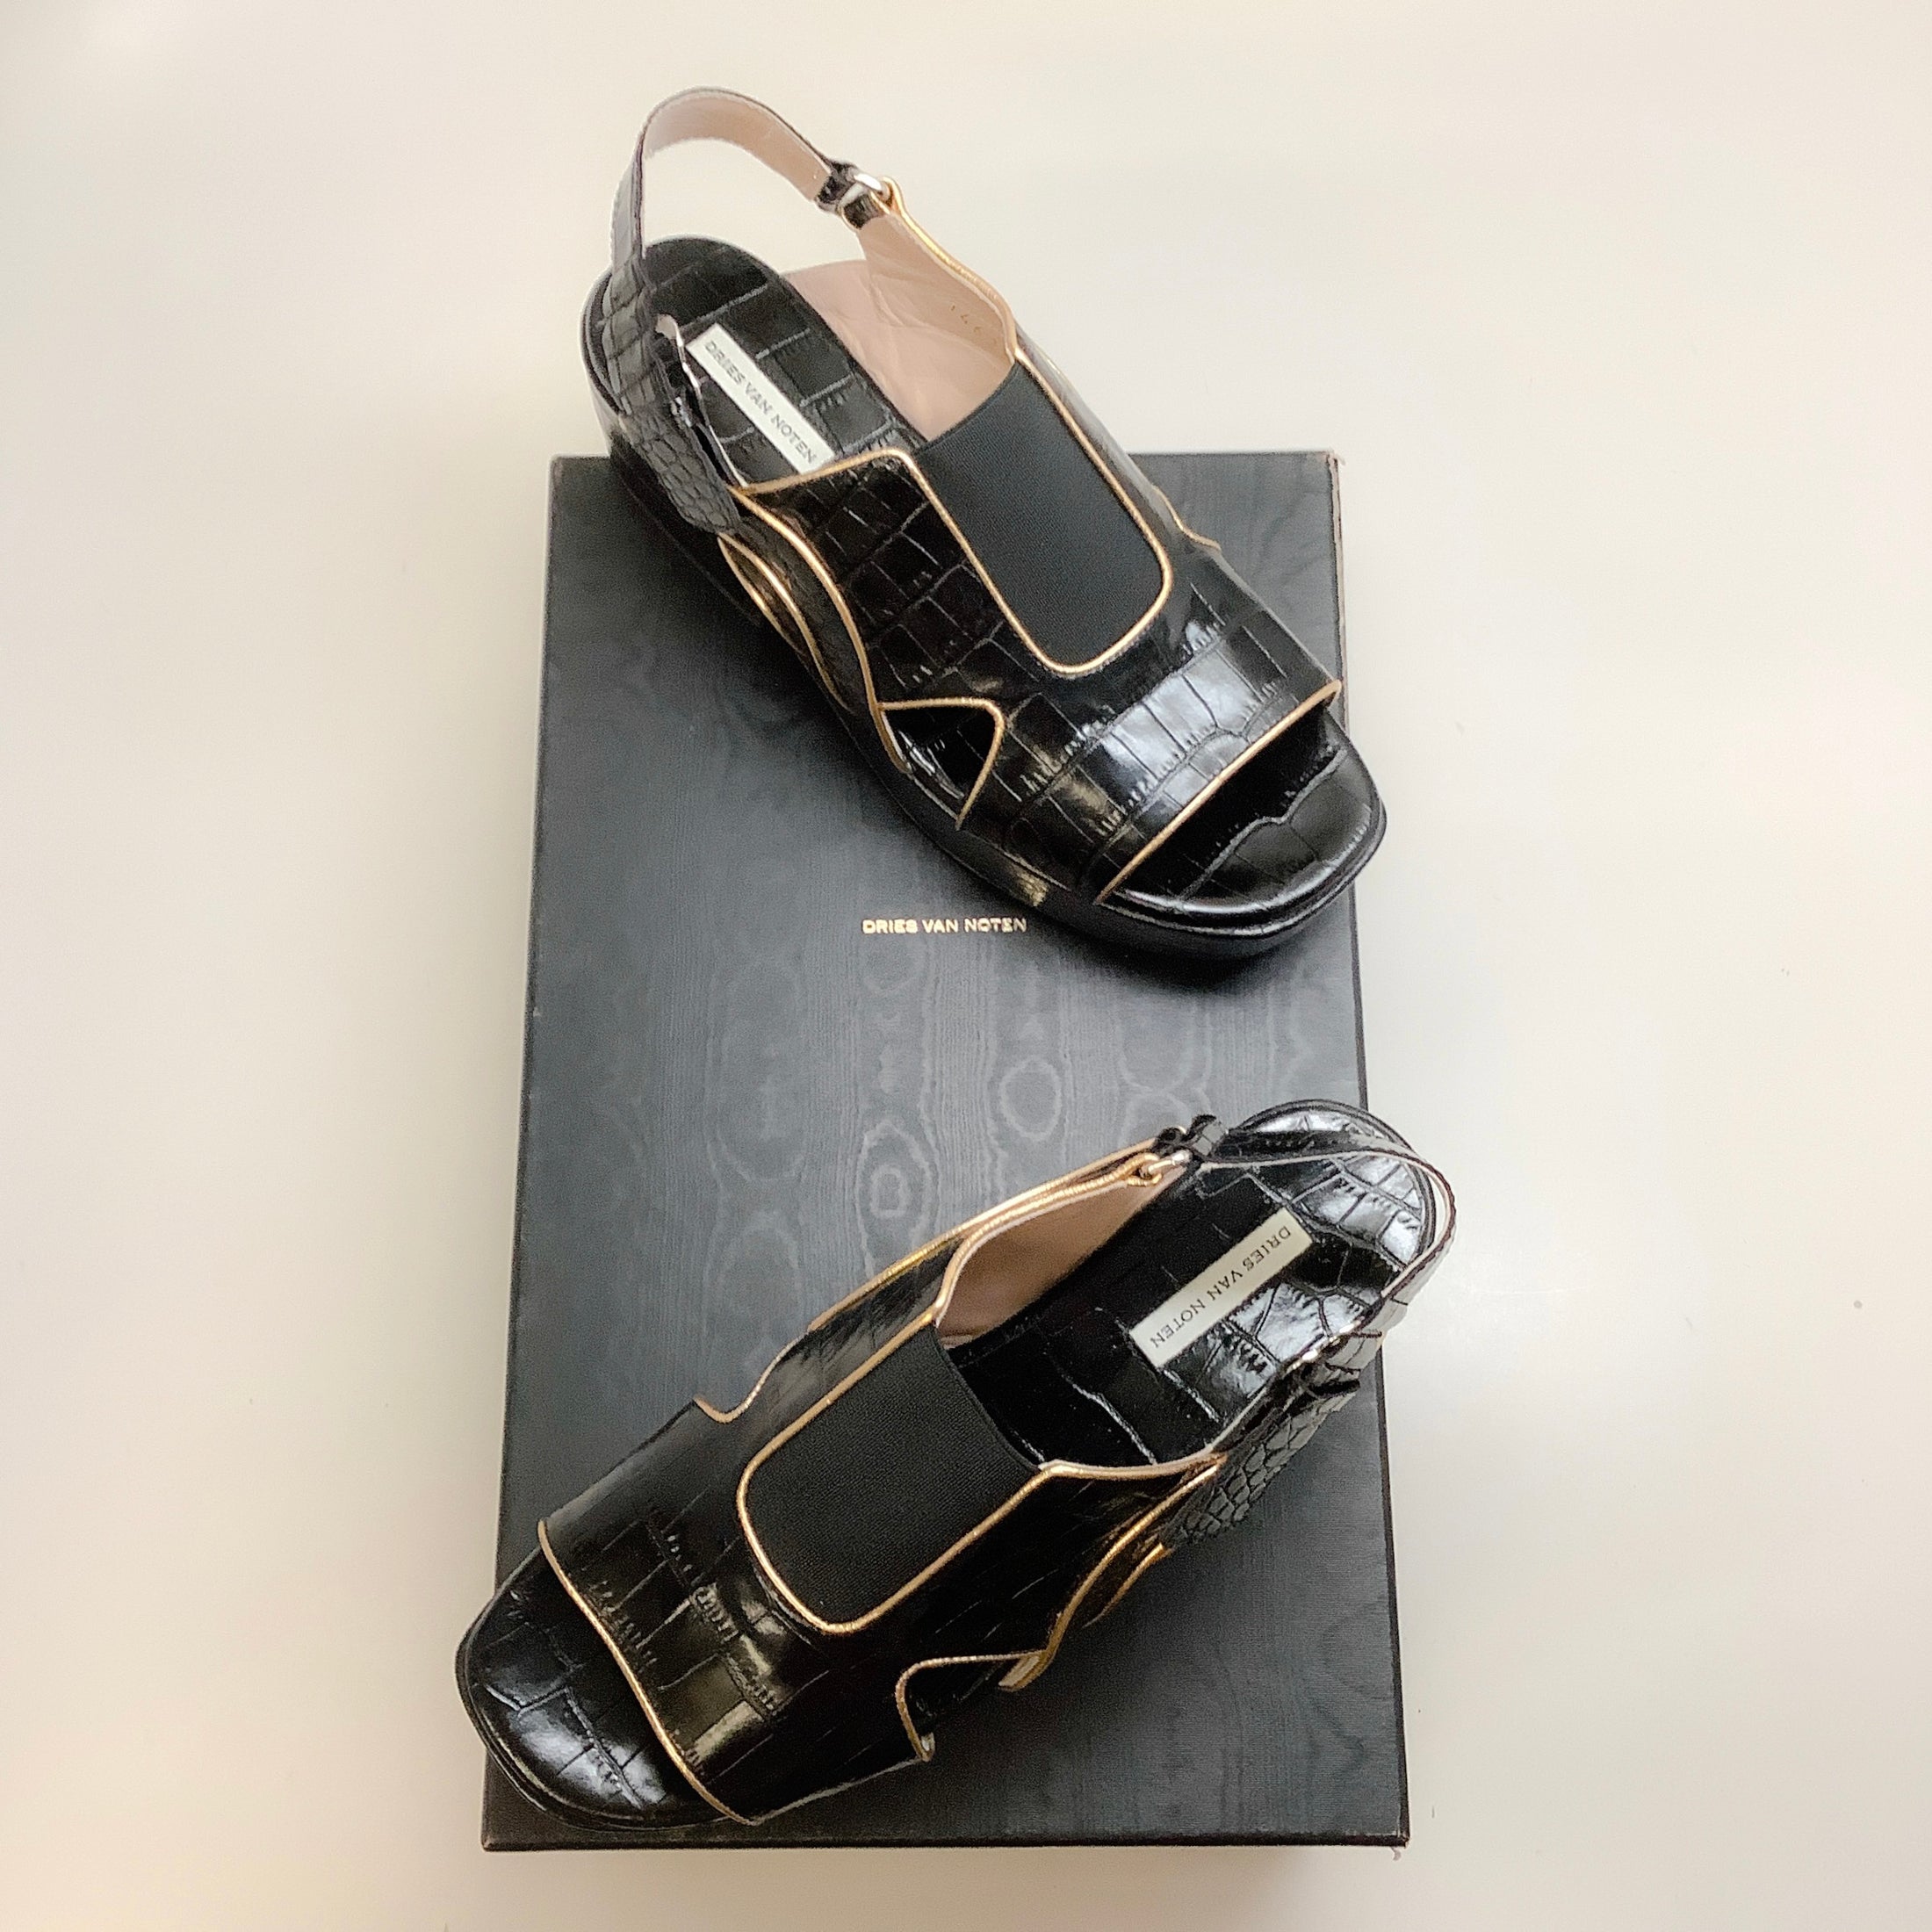 Dries Van Noten Black Croc Embossed Platform Sandal with Gold Embellishments